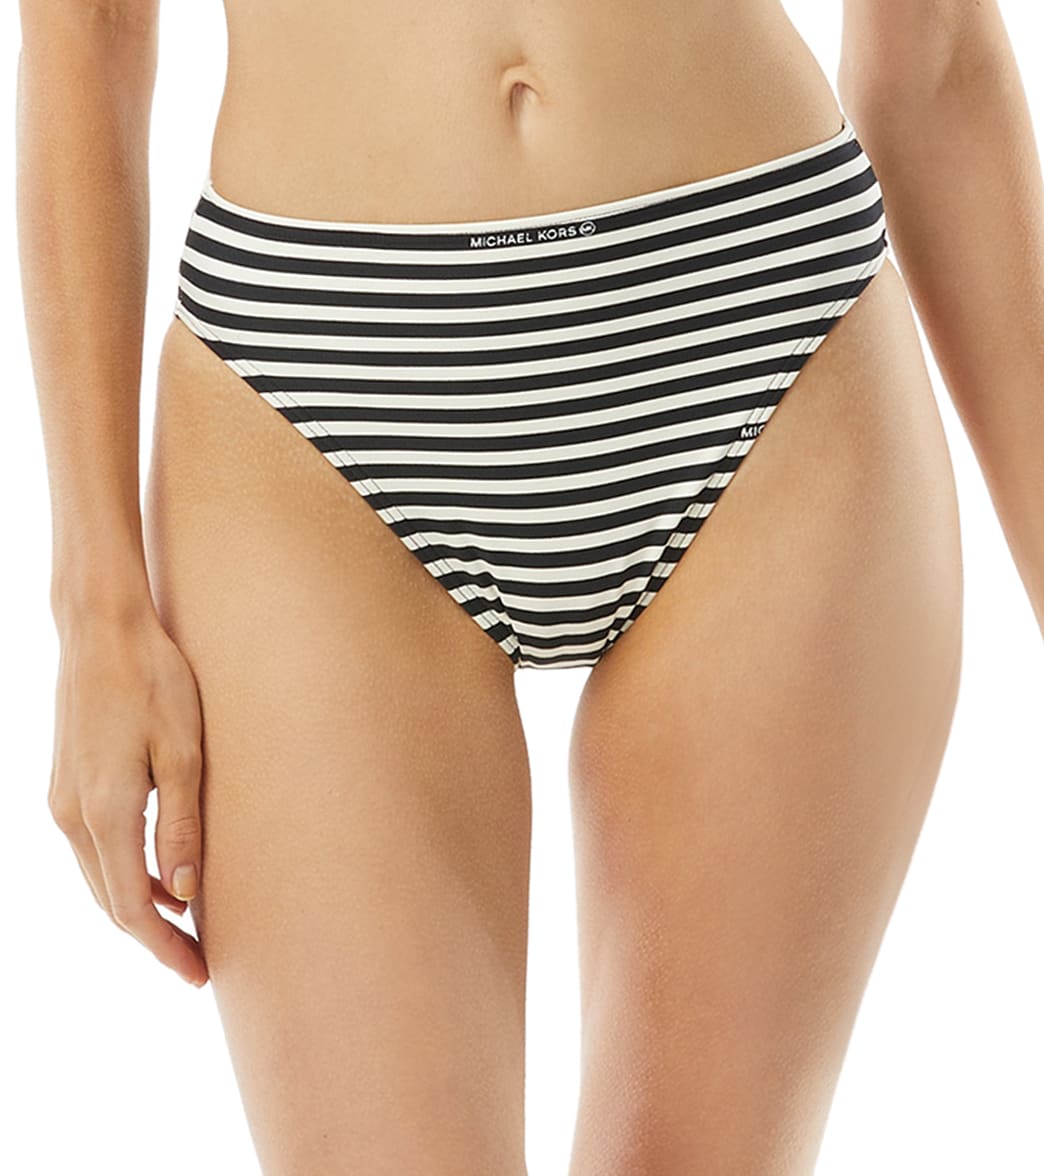 Michael Kors Women's Logo Stripe High Waisted Bottom - Bone Small - Swimoutlet.com